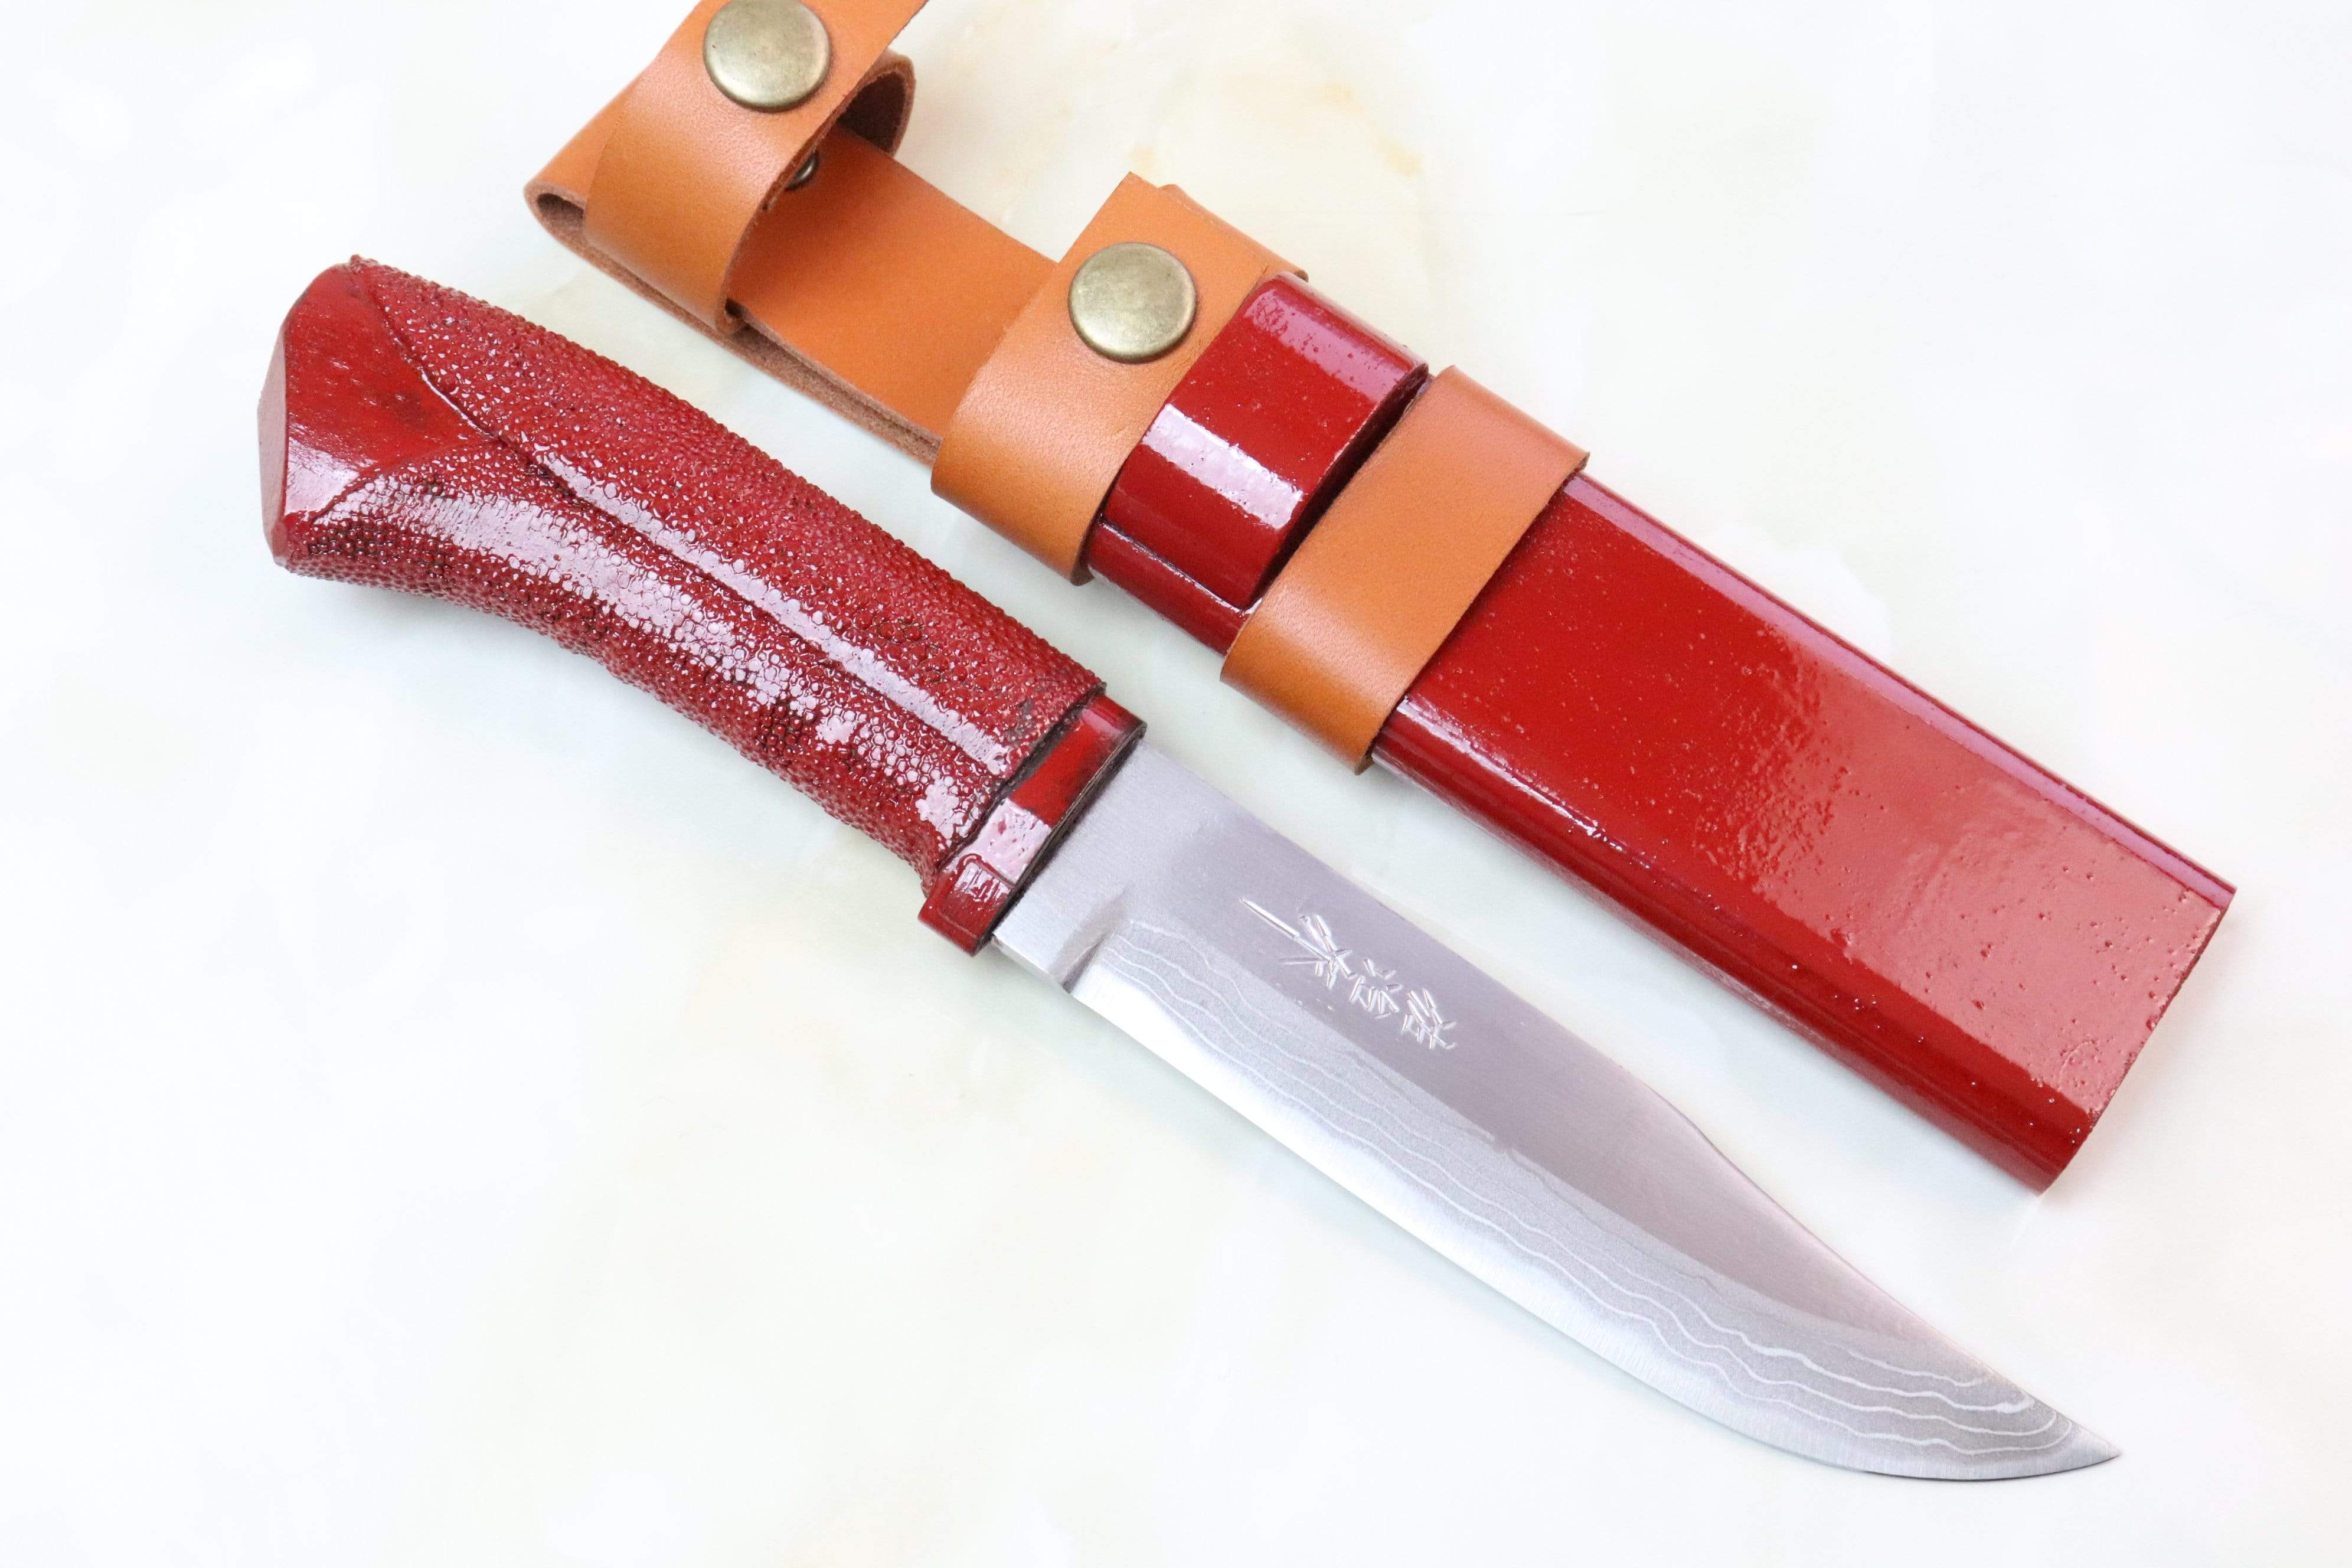 Takeshi Saji R-2 Damascus Steak Knife (Black G-10 Handle, TS-120B)